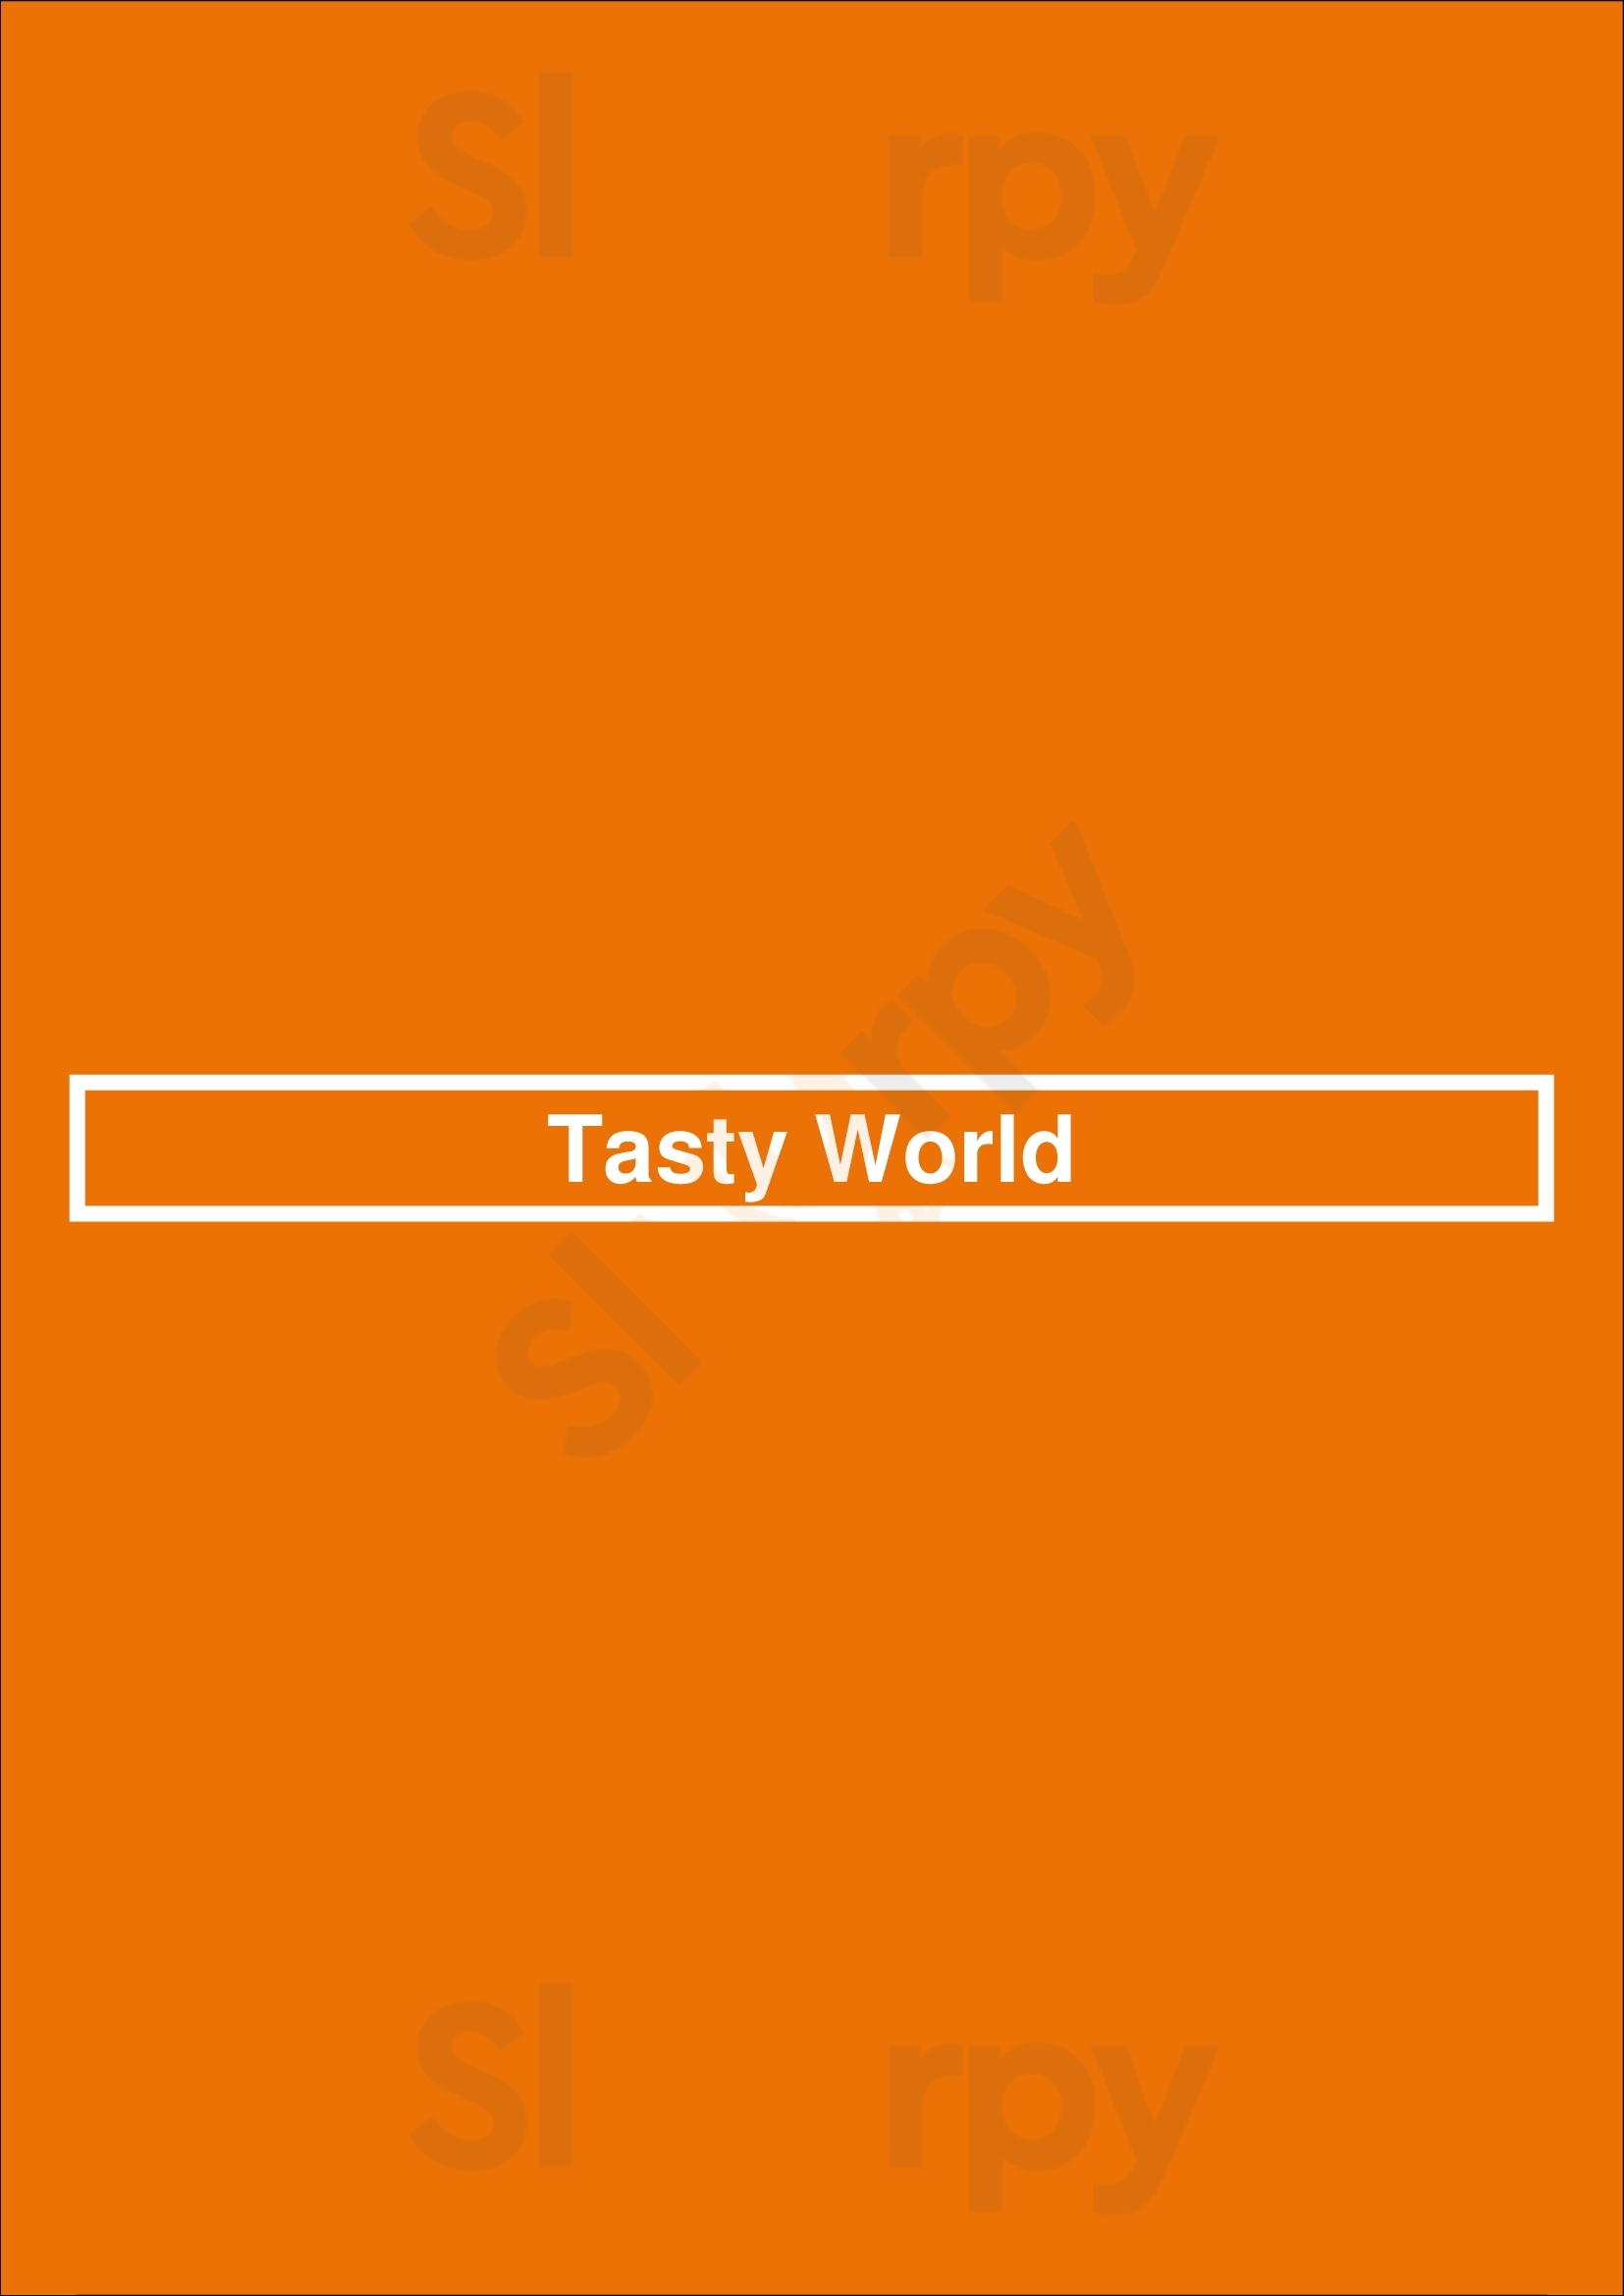 Tasty World Hoogerheide Menu - 1